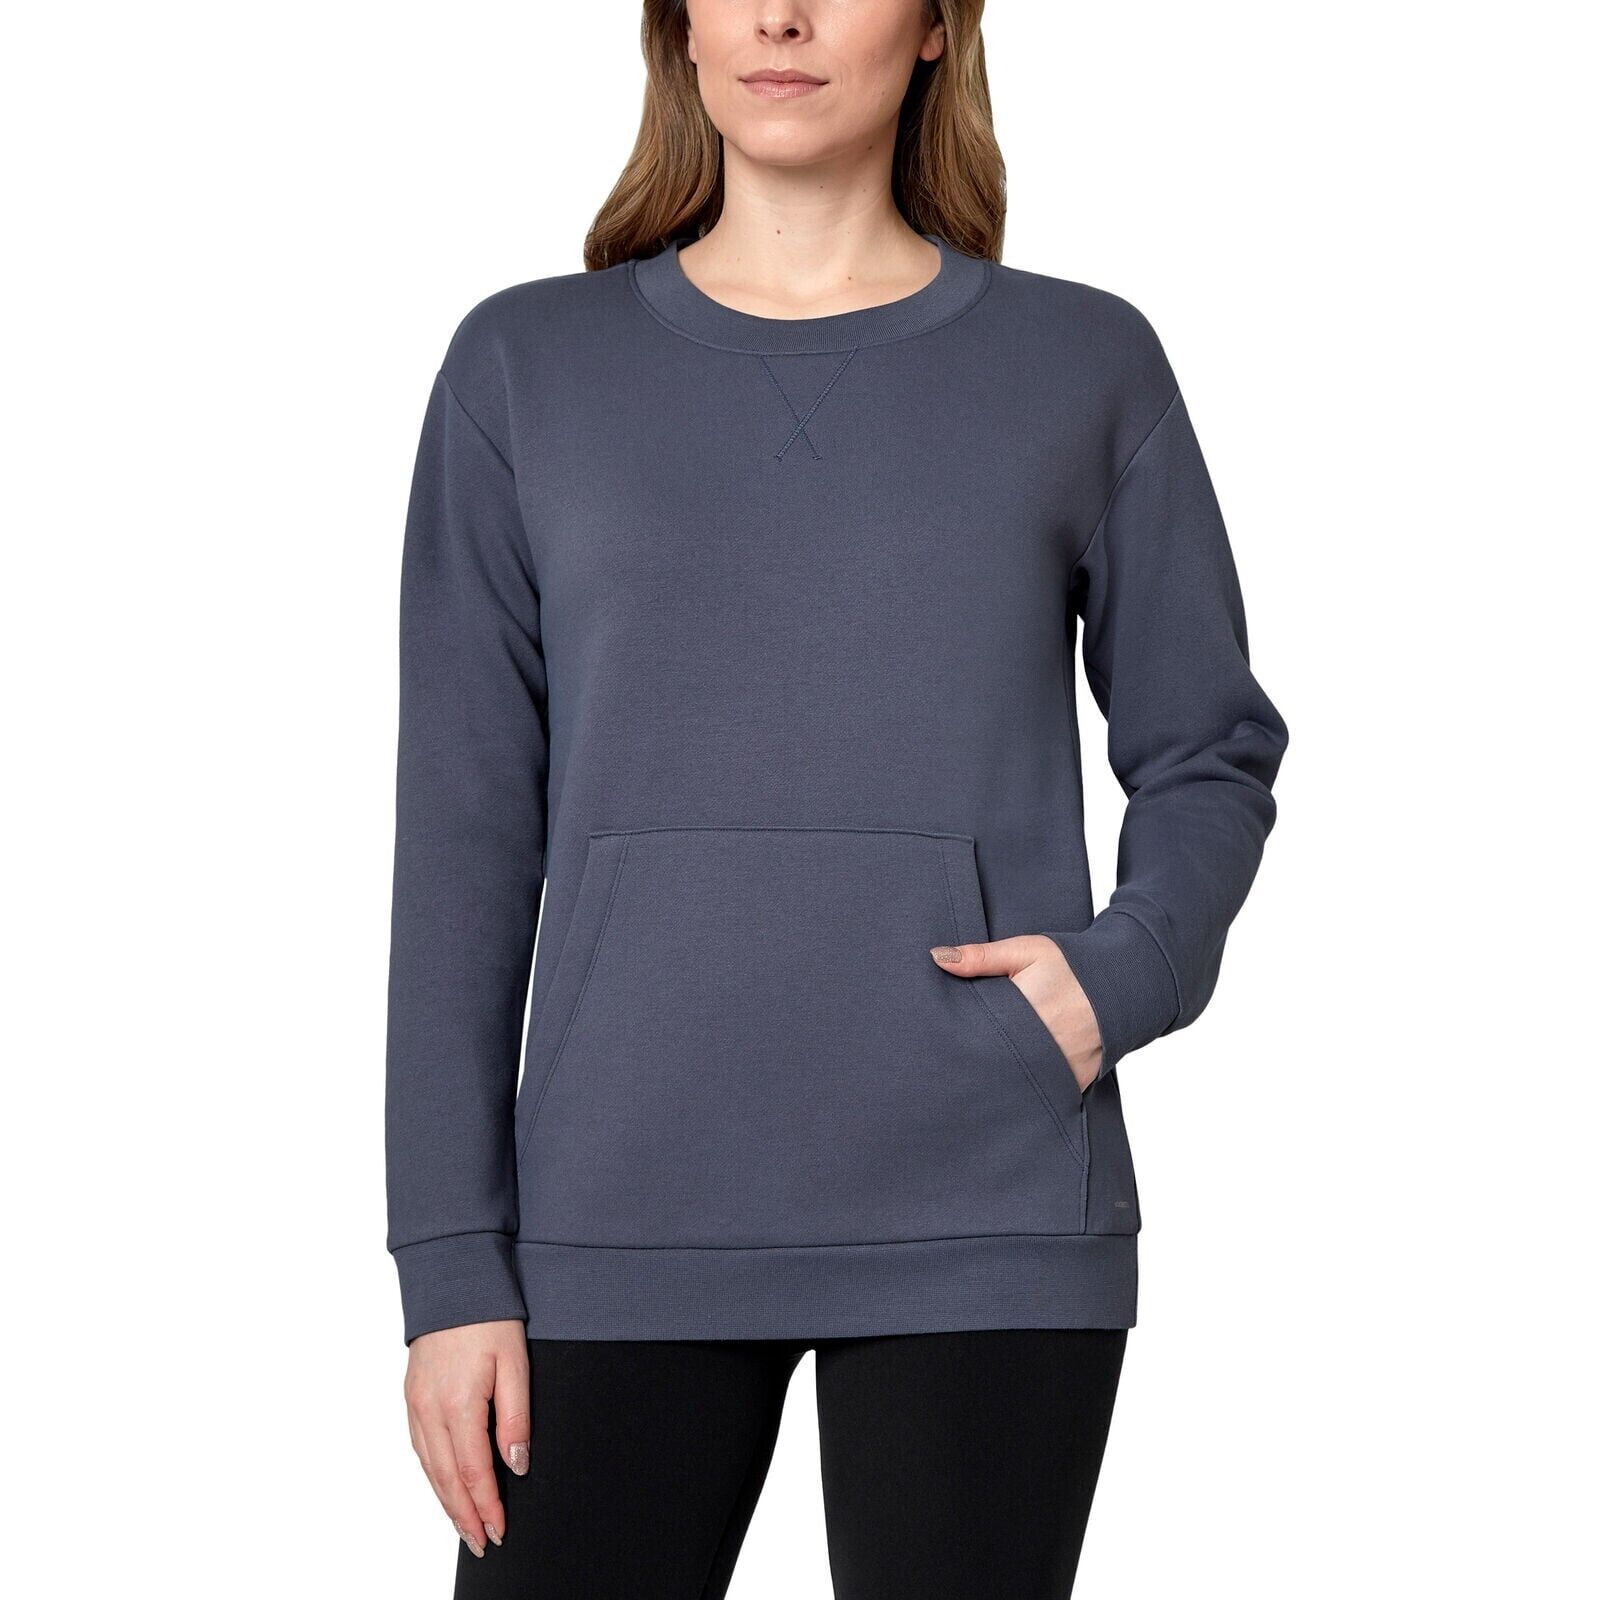 Mondetta Women's Everyday Soft Fleece Crewneck Sweatshirt (Black